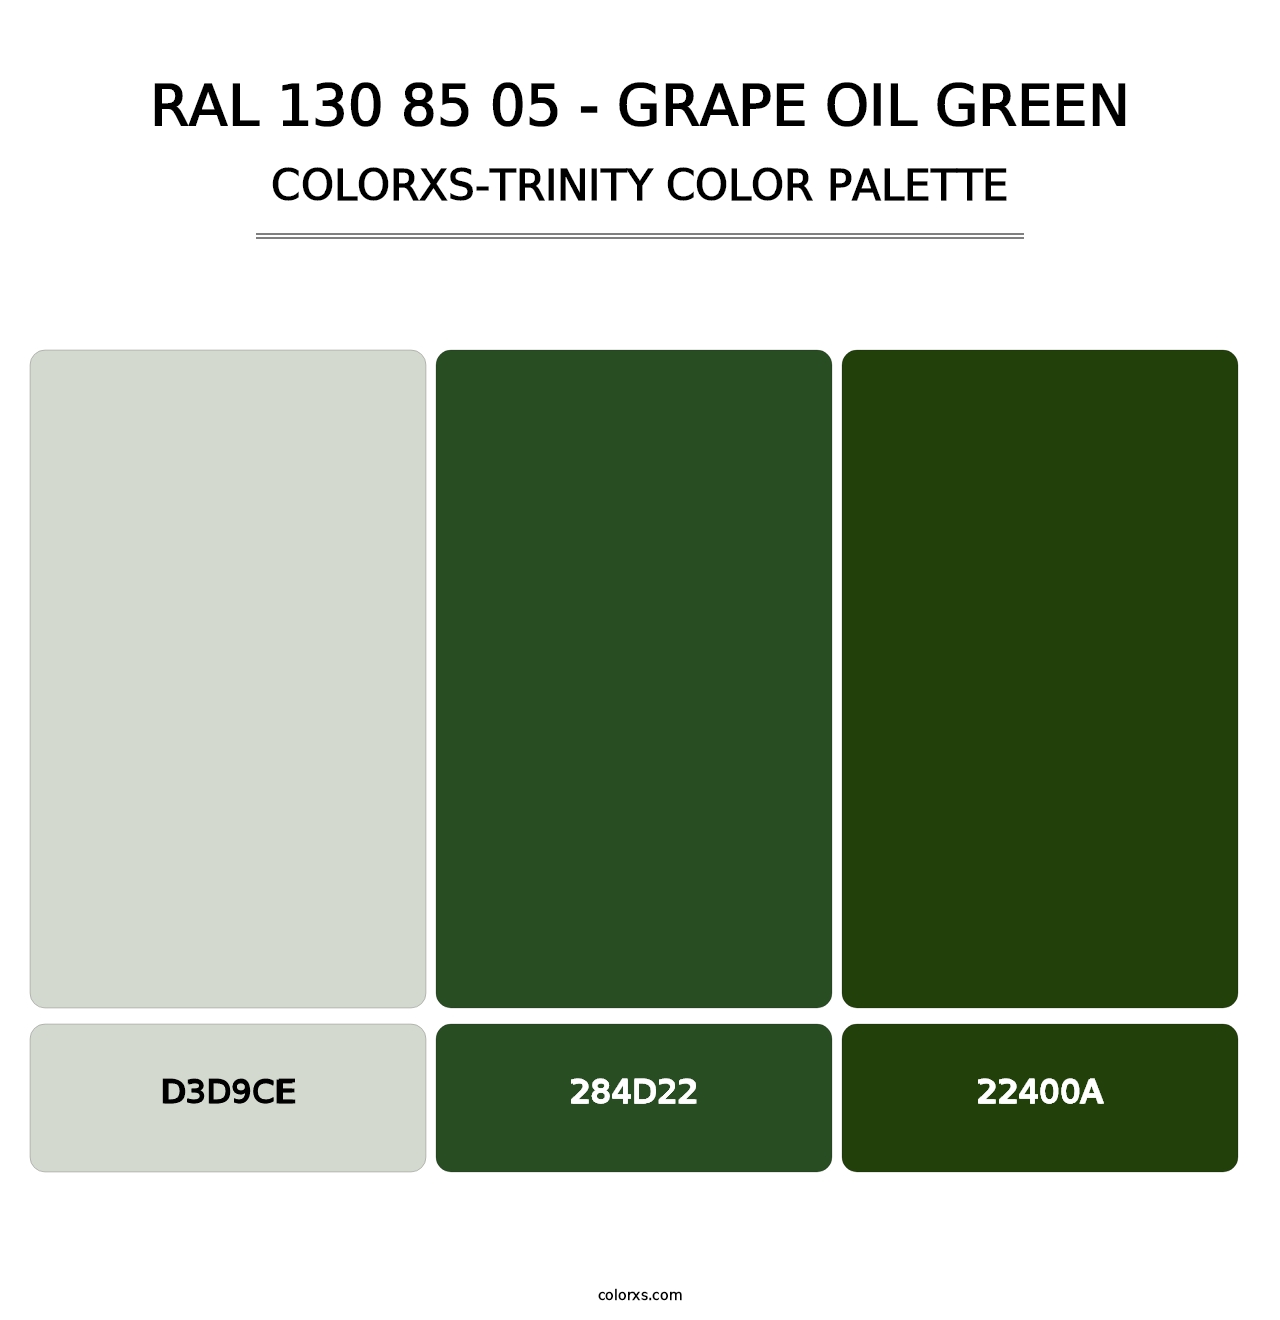 RAL 130 85 05 - Grape Oil Green - Colorxs Trinity Palette